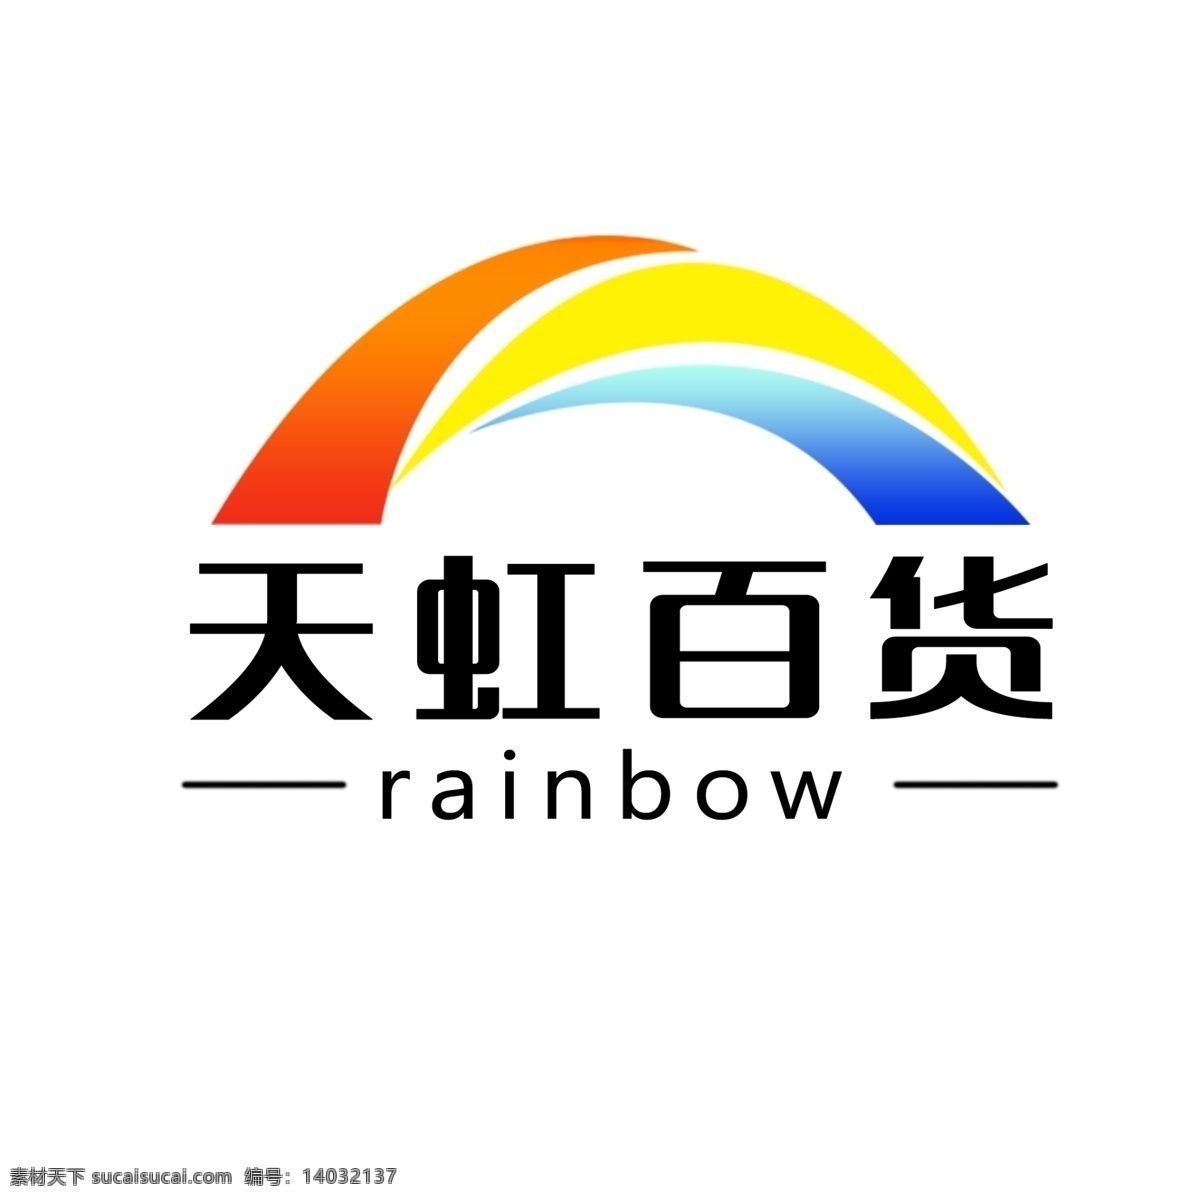 天虹logo 天虹 logo 百货